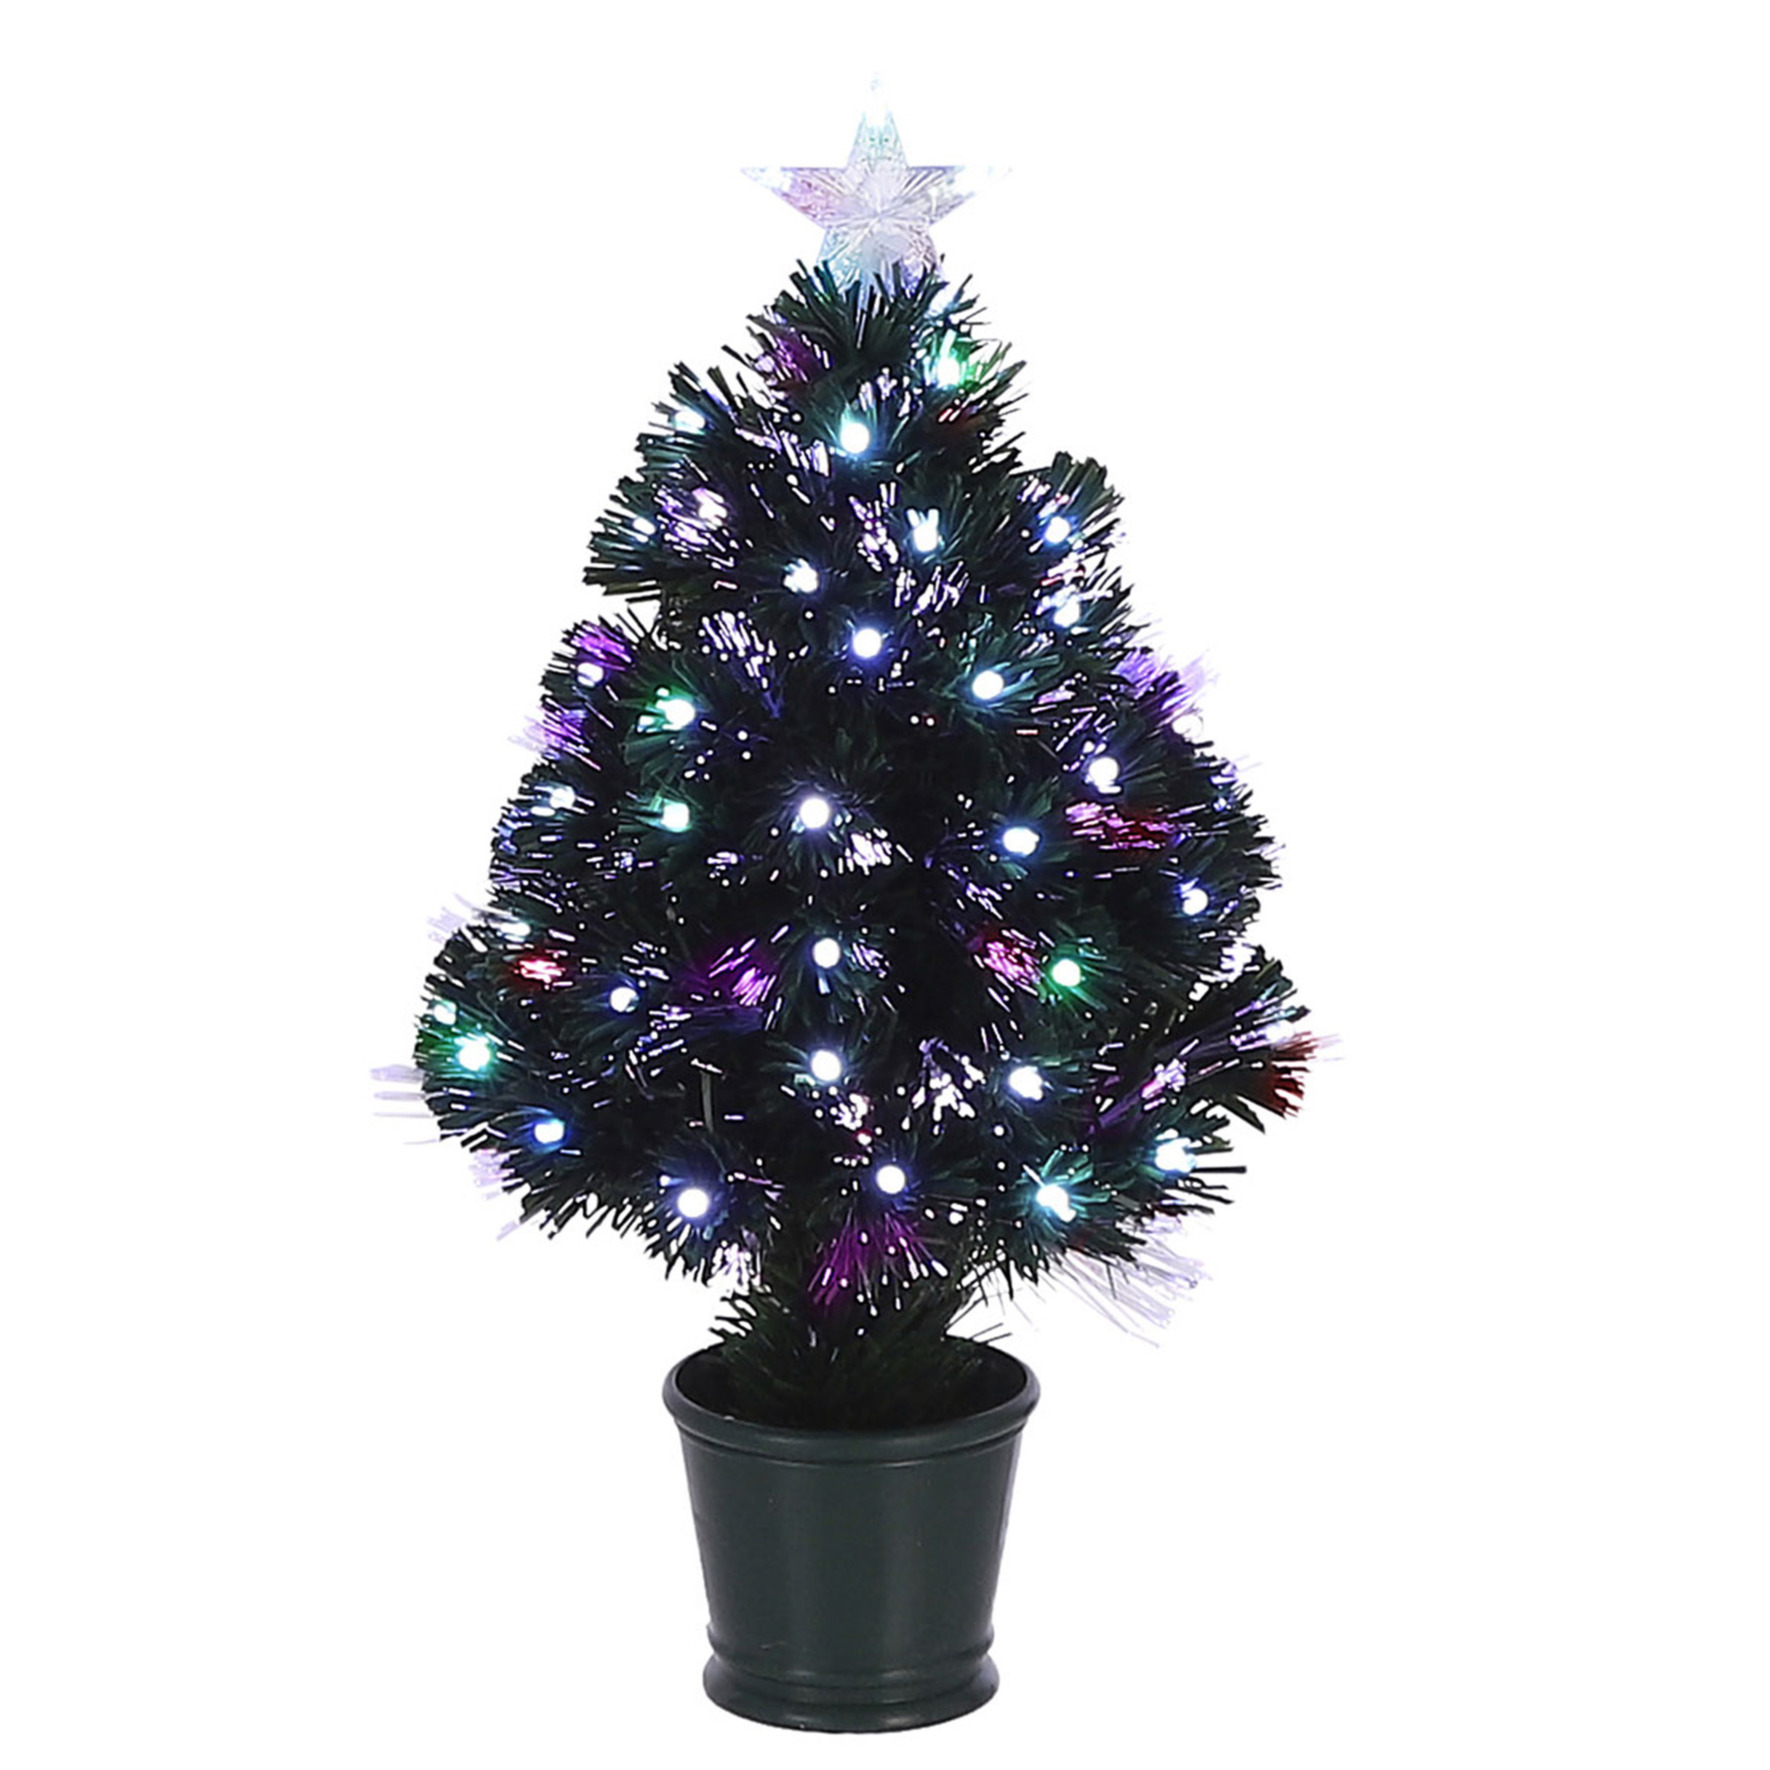 Fiber optic kerstboom kunst kerstboom met knipperende verlichting en piek ster 60 cm